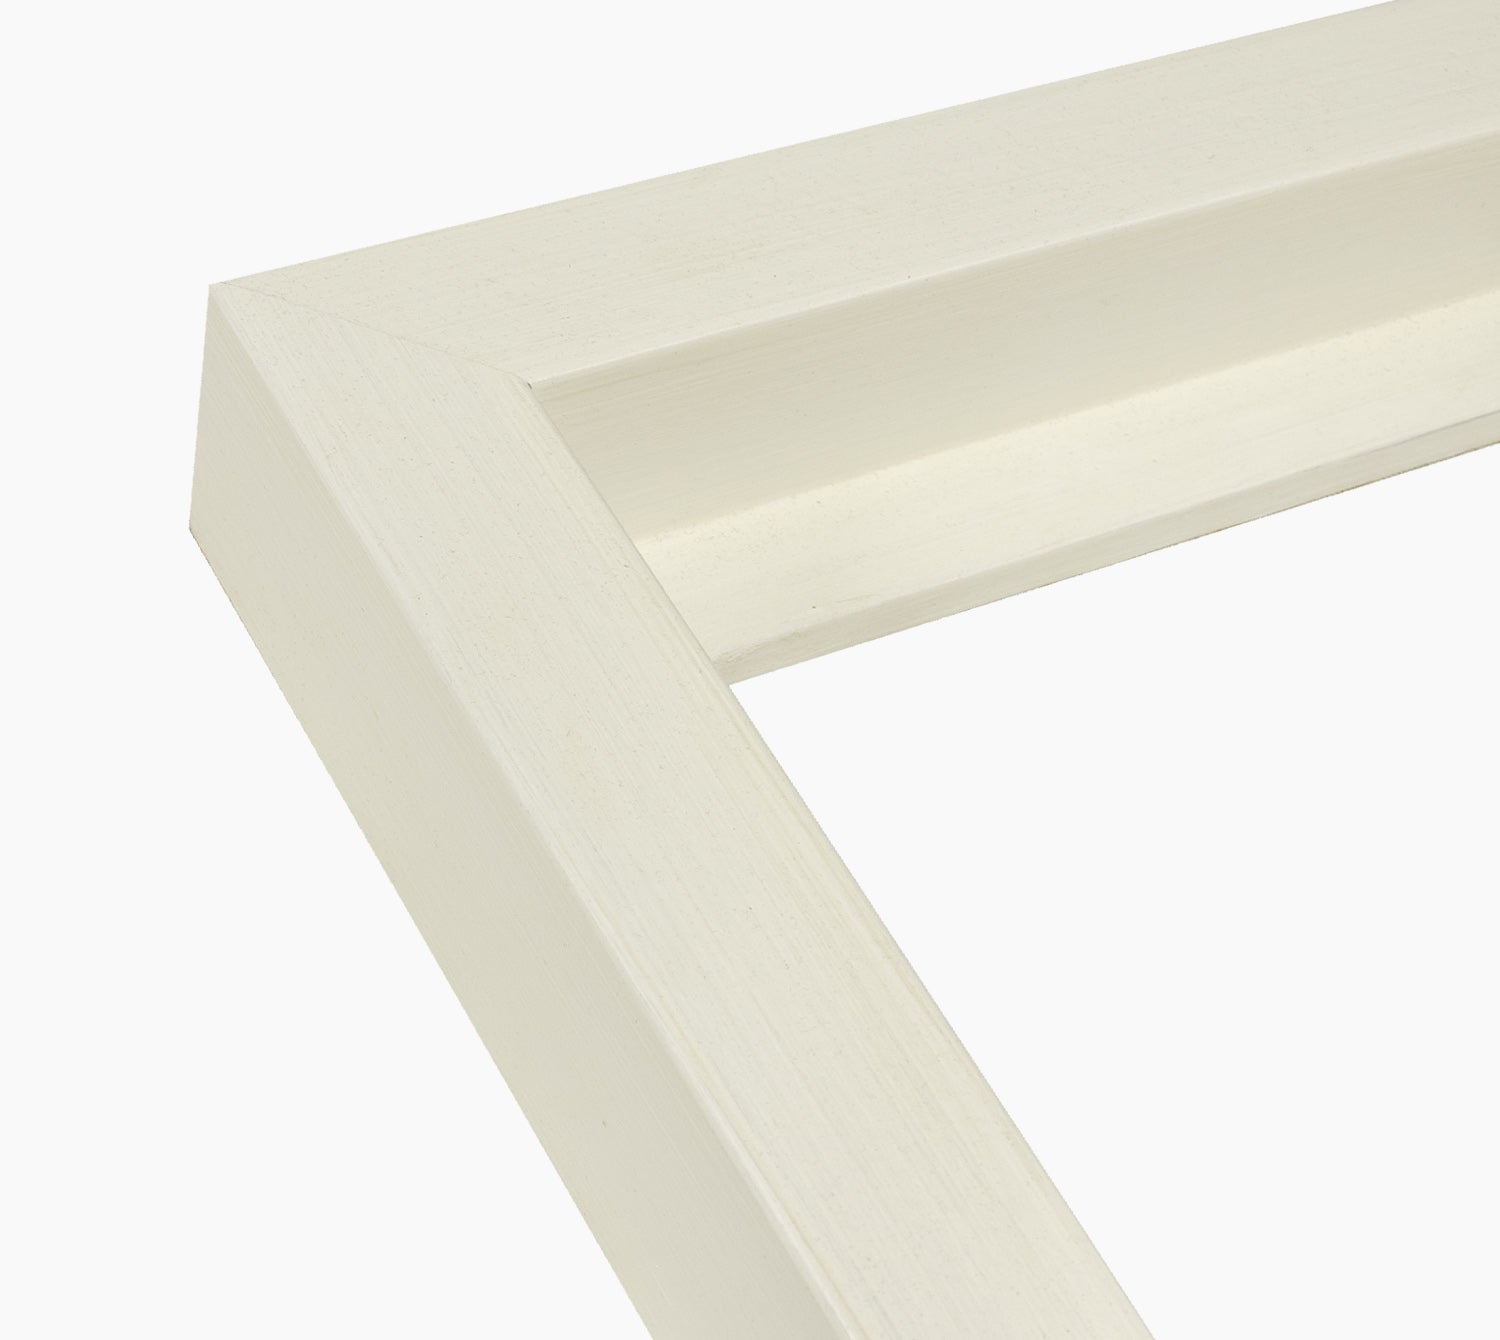 605.899 cadre en bois blanc avec de la cire mesure de profil 60x55 mm Lombarda cornici S.n.c.